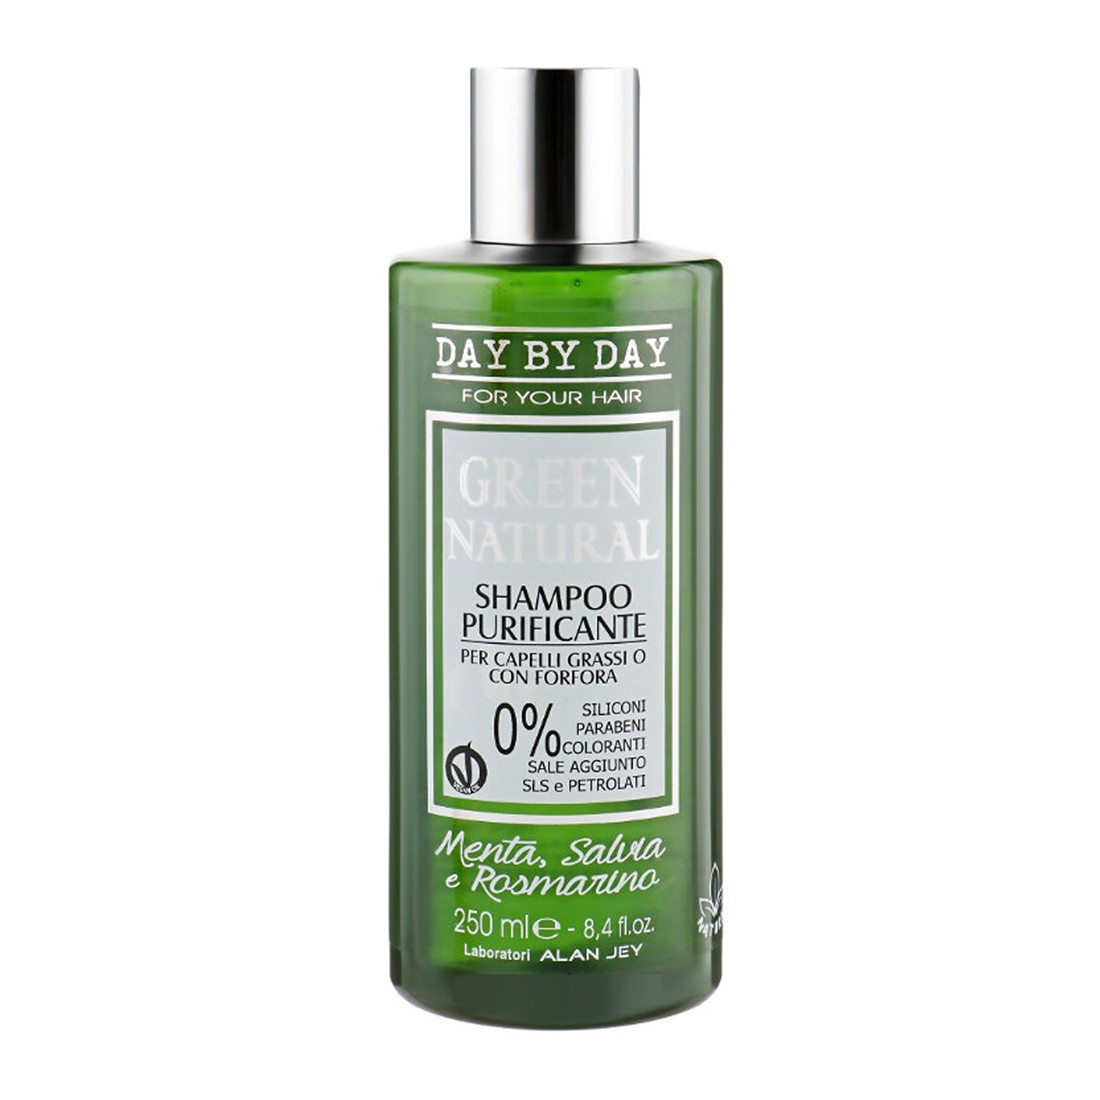 Alan Jey Green Natural Shampoo Purificante Шампунь очищаючий для жирного волосся з лупою